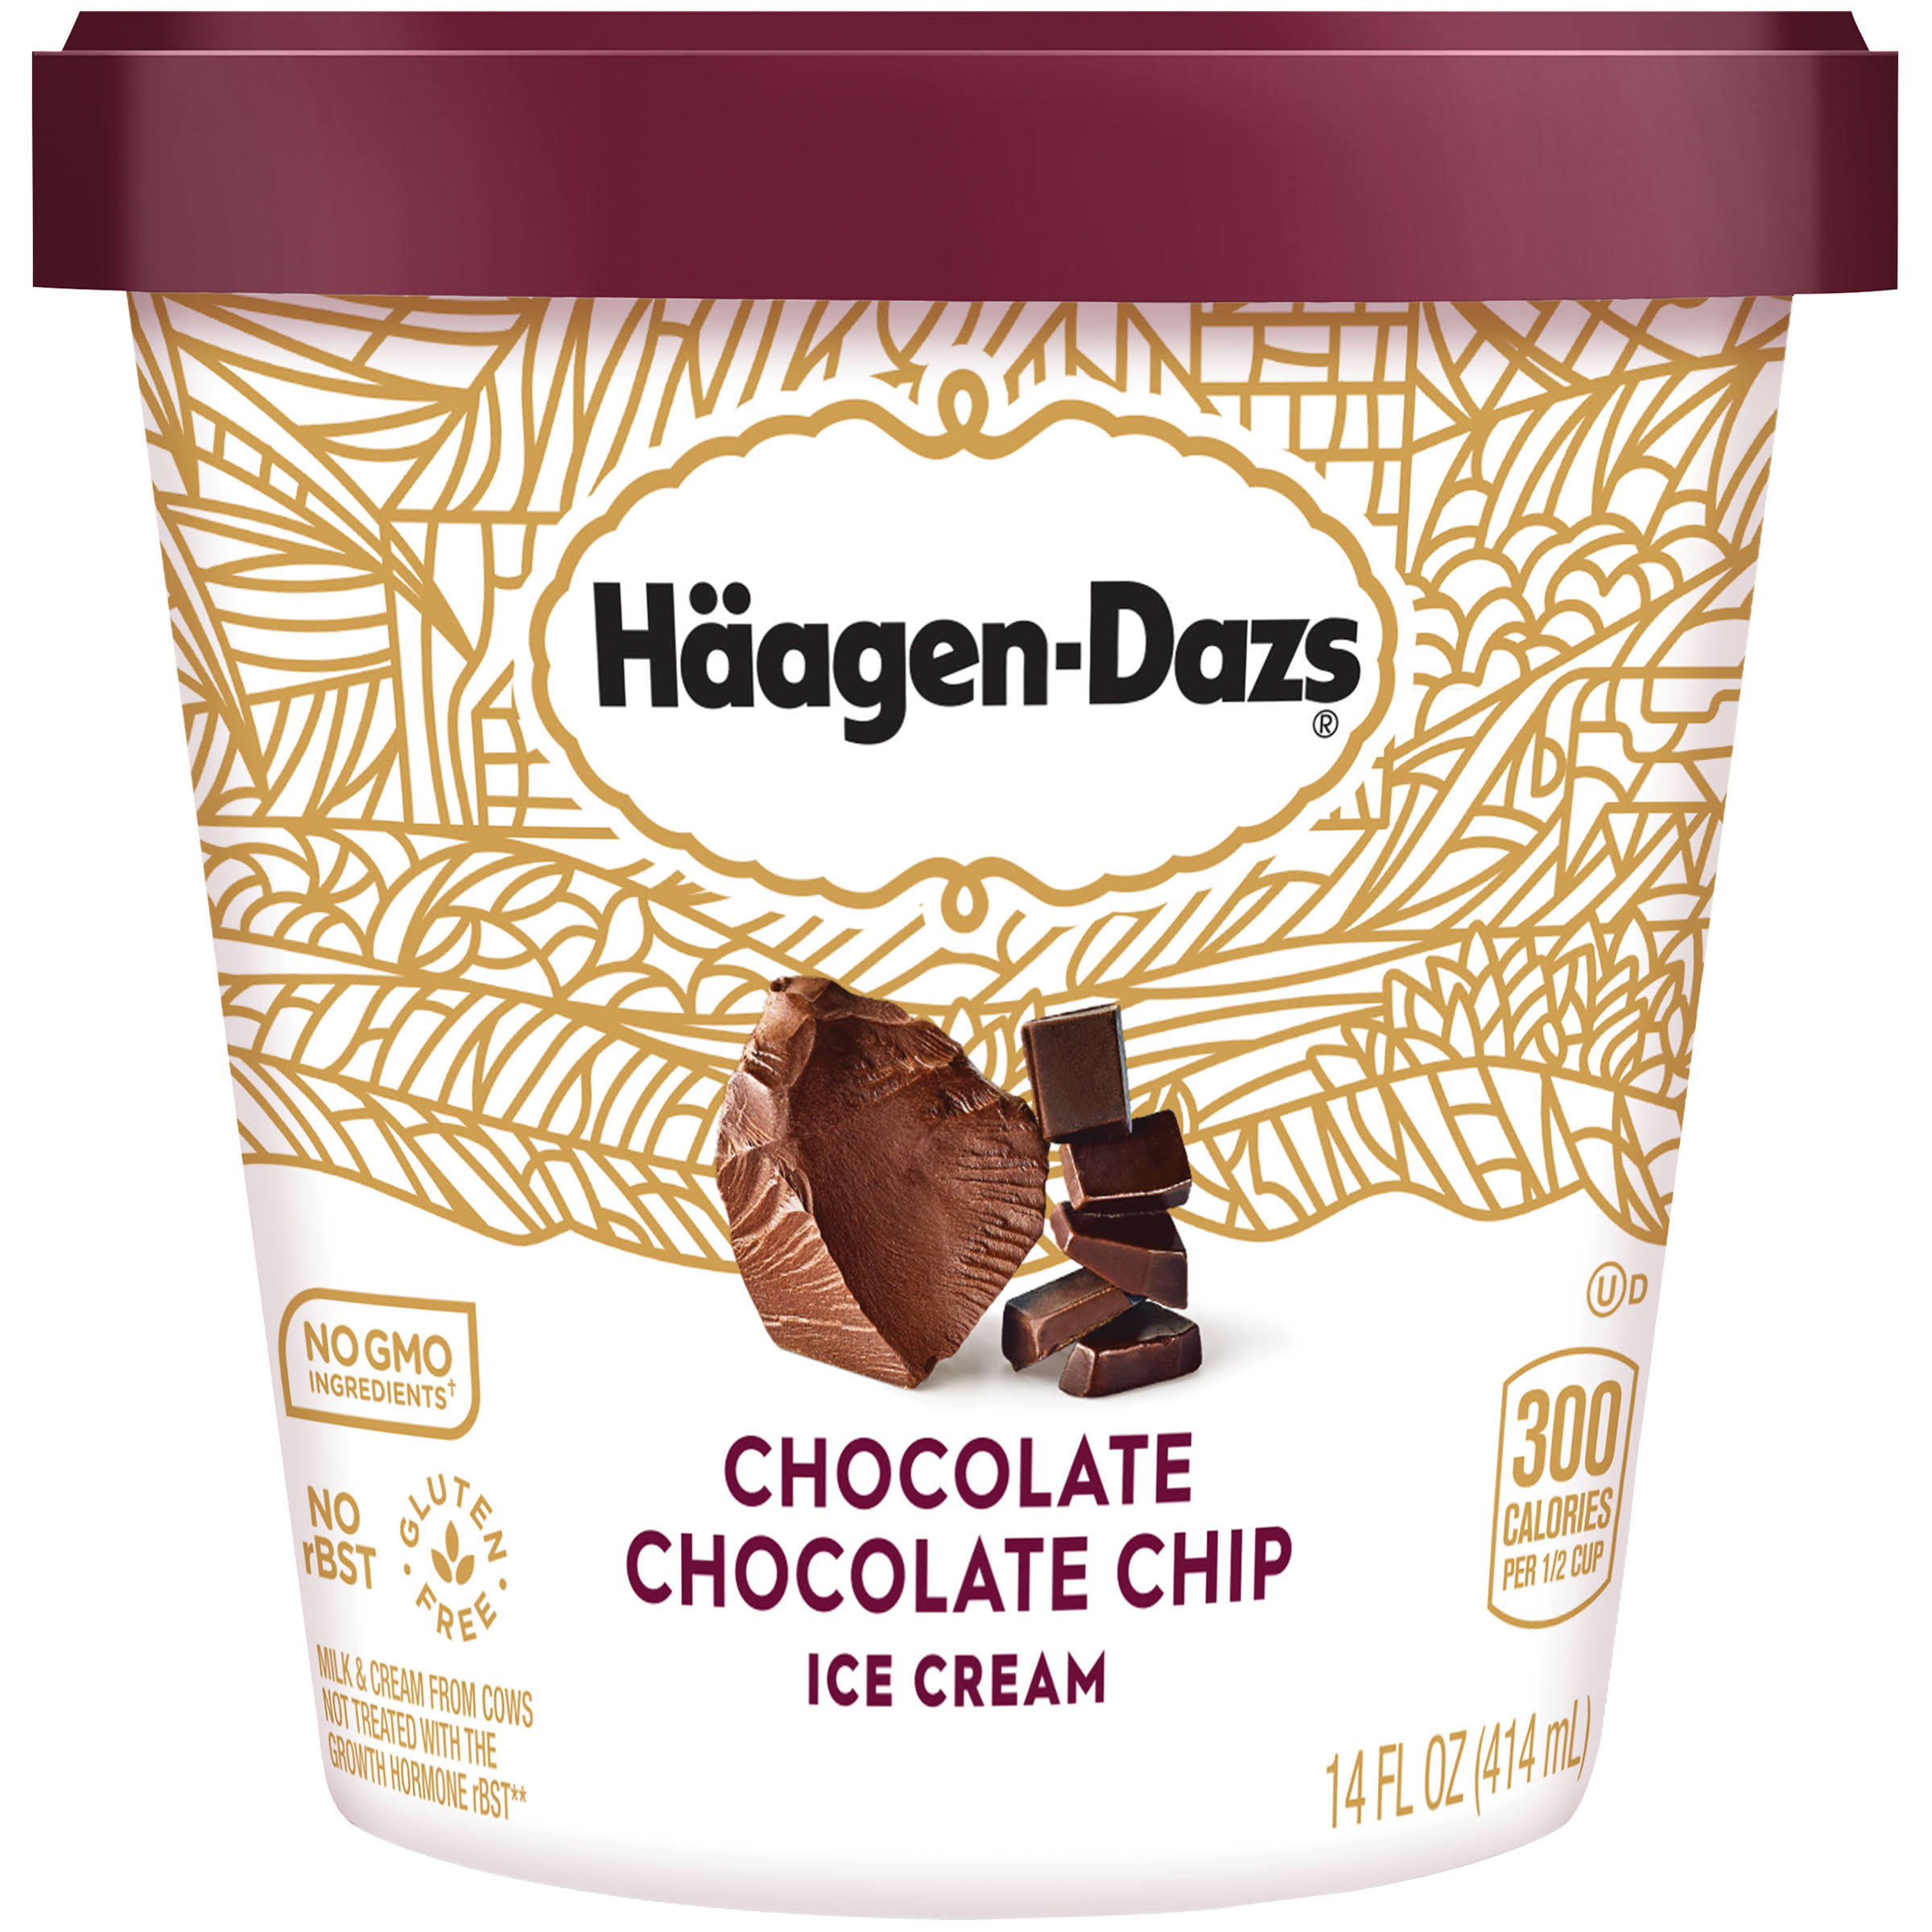 Haagen-Dazs Ice Cream - Chocolate Chocolate Chip